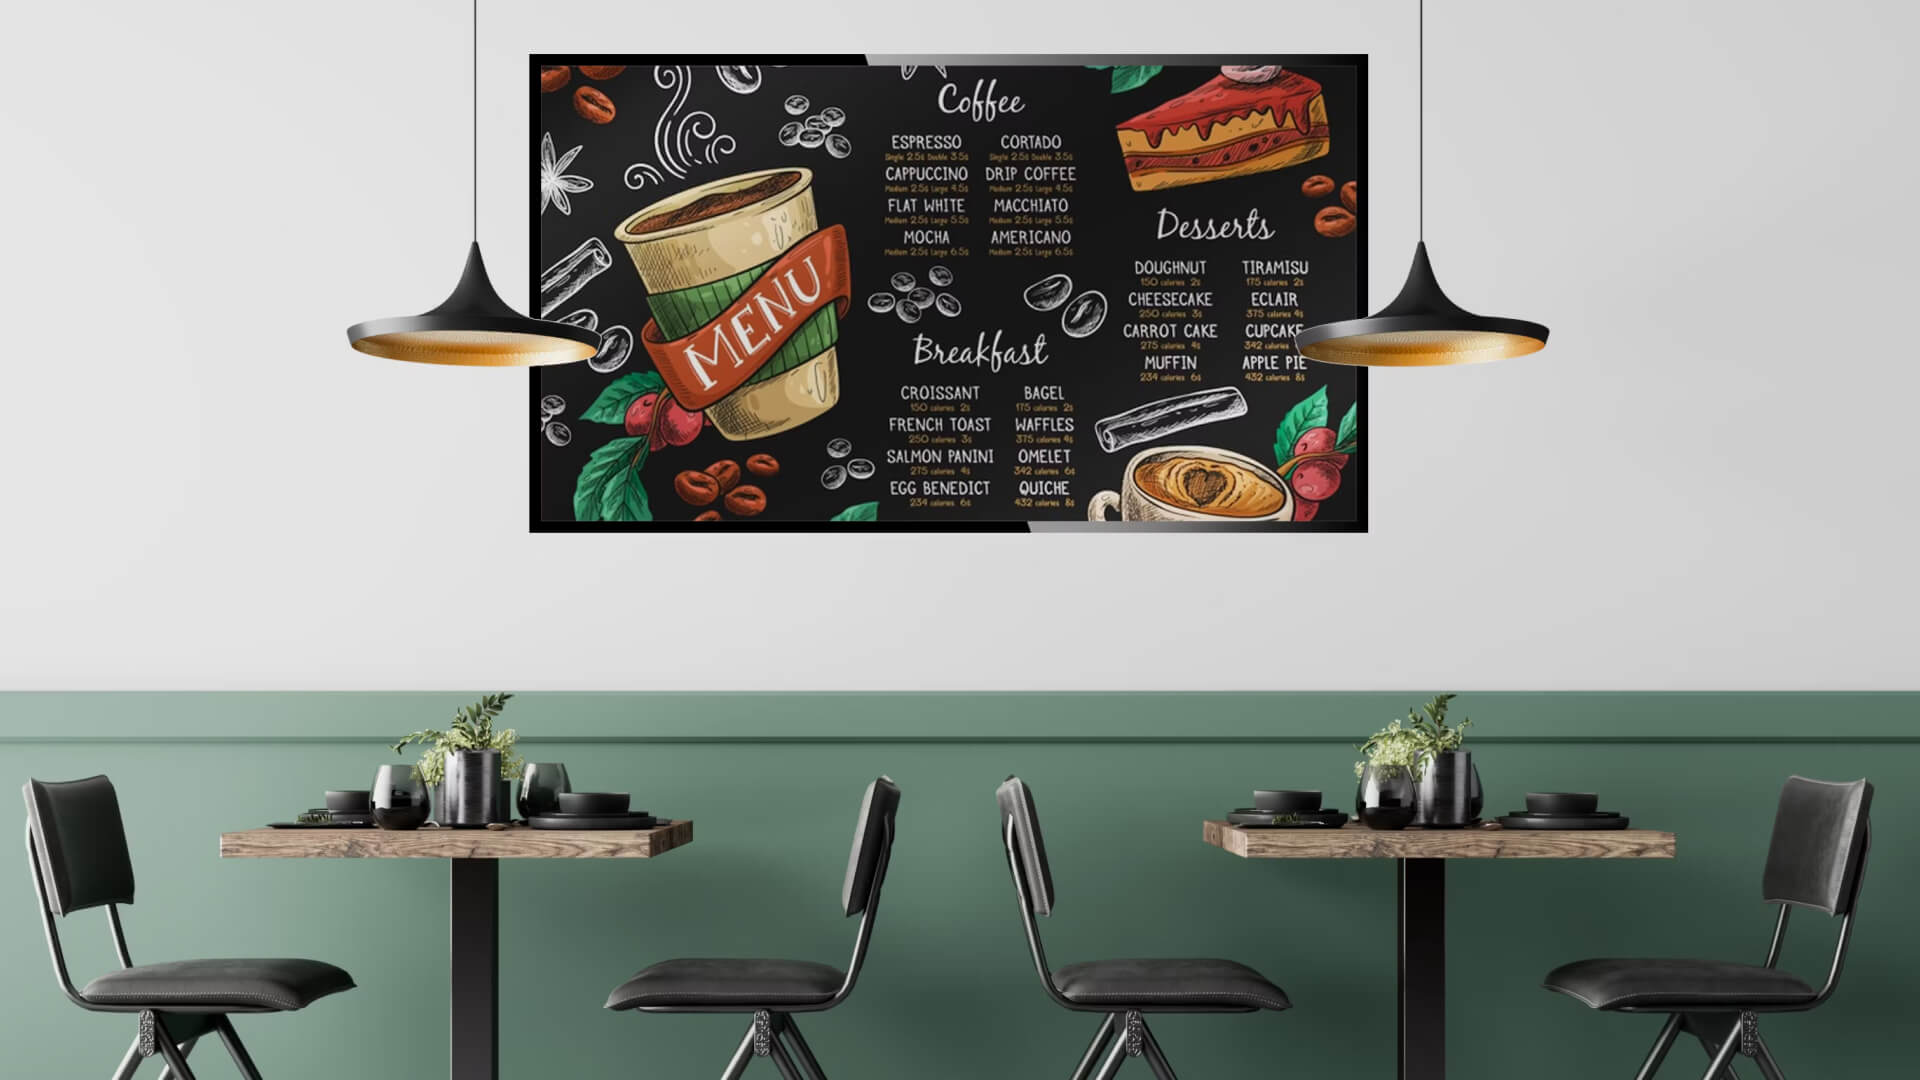  A digital menu board